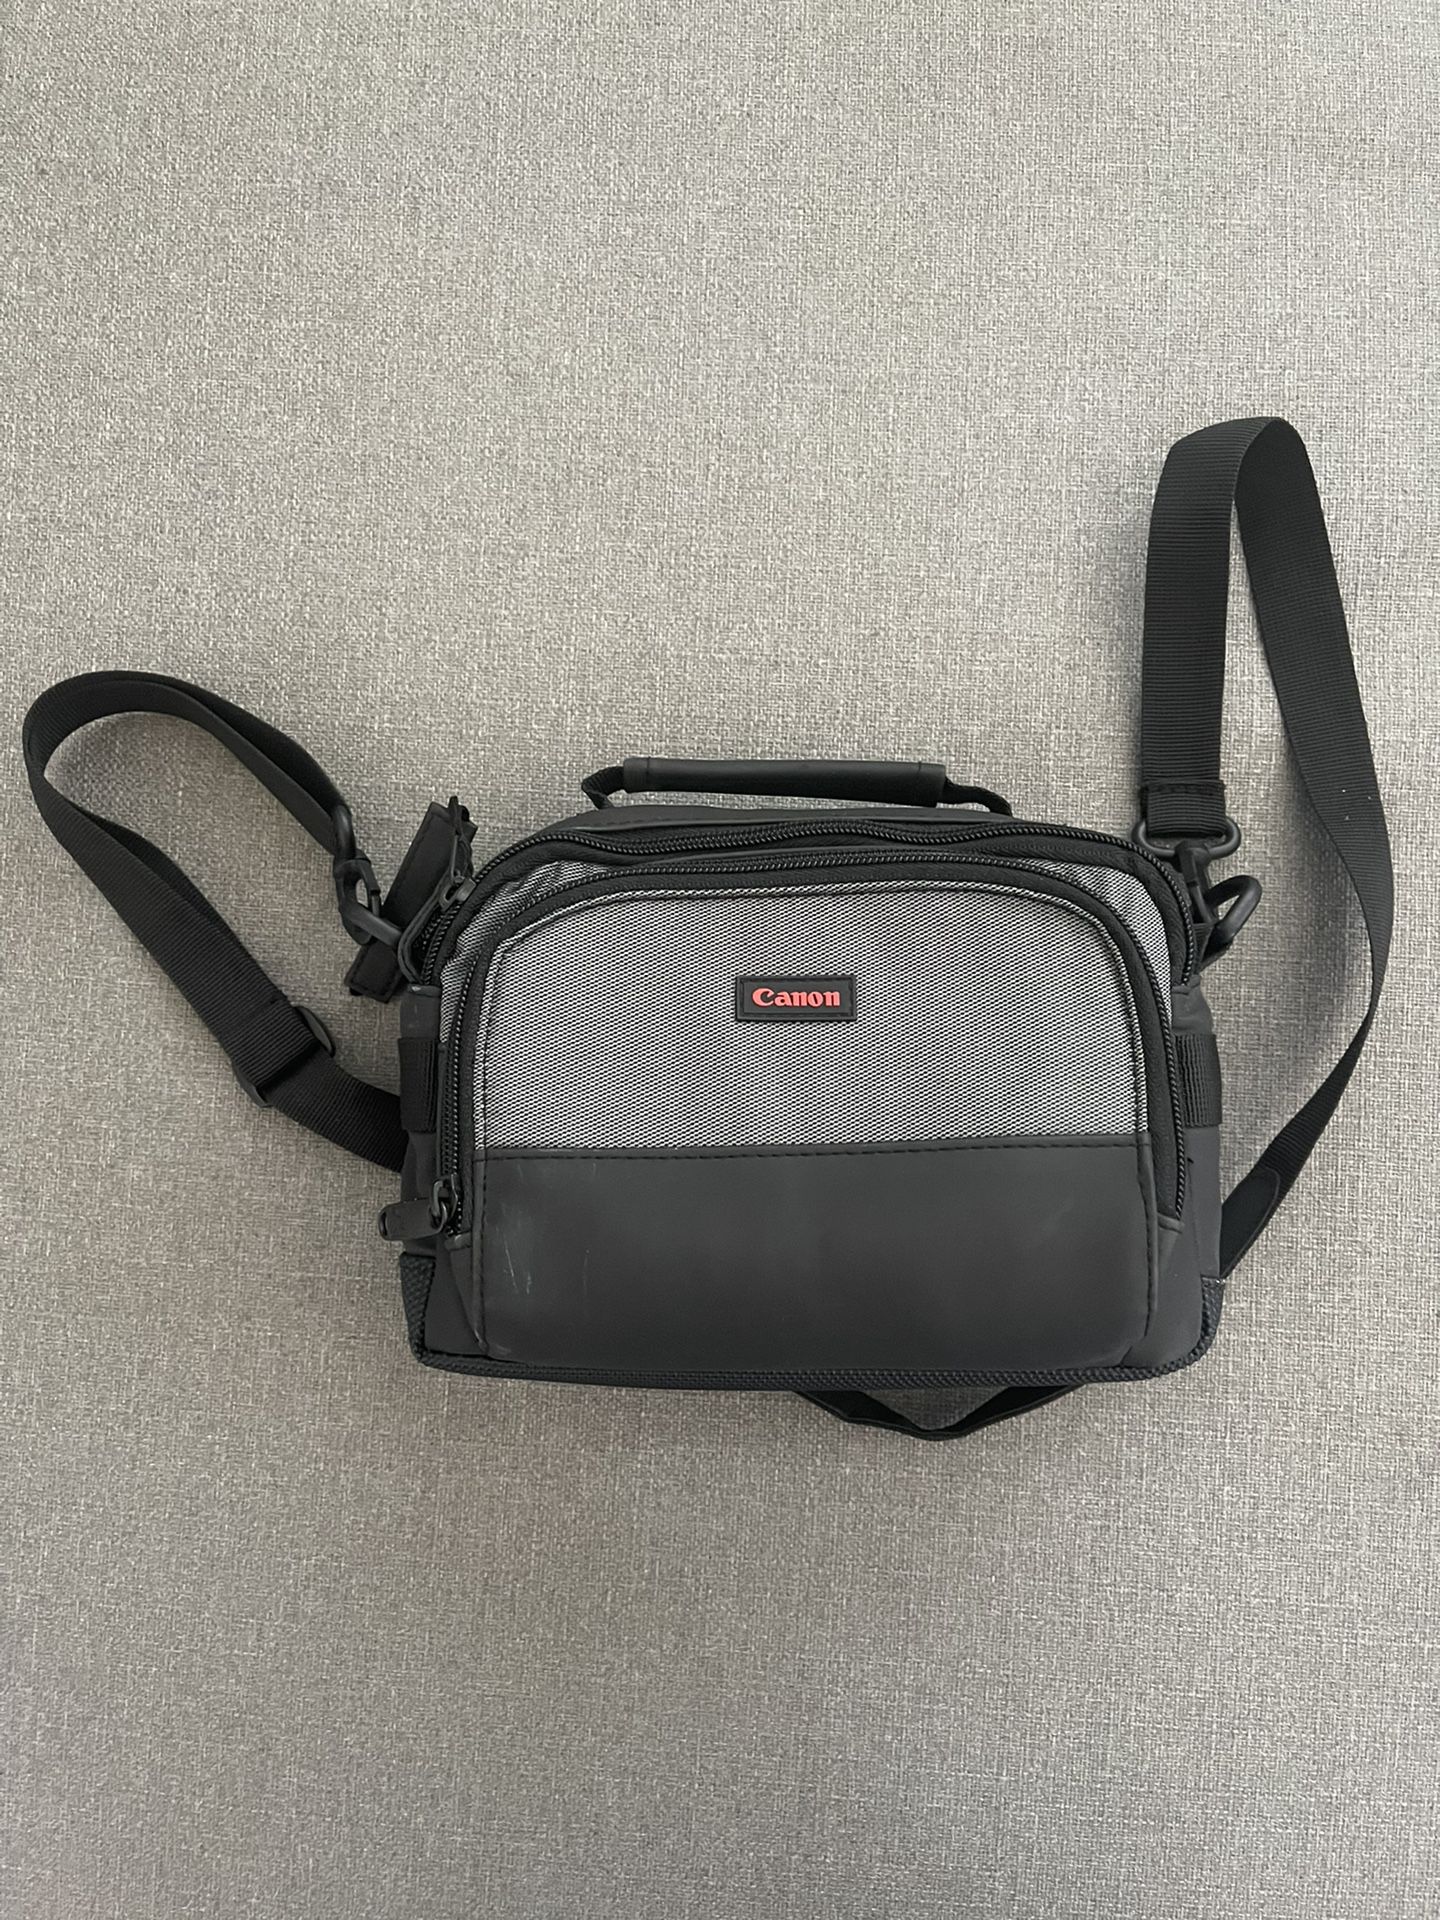 Canon Genuine Camera Camcorder bag with strap